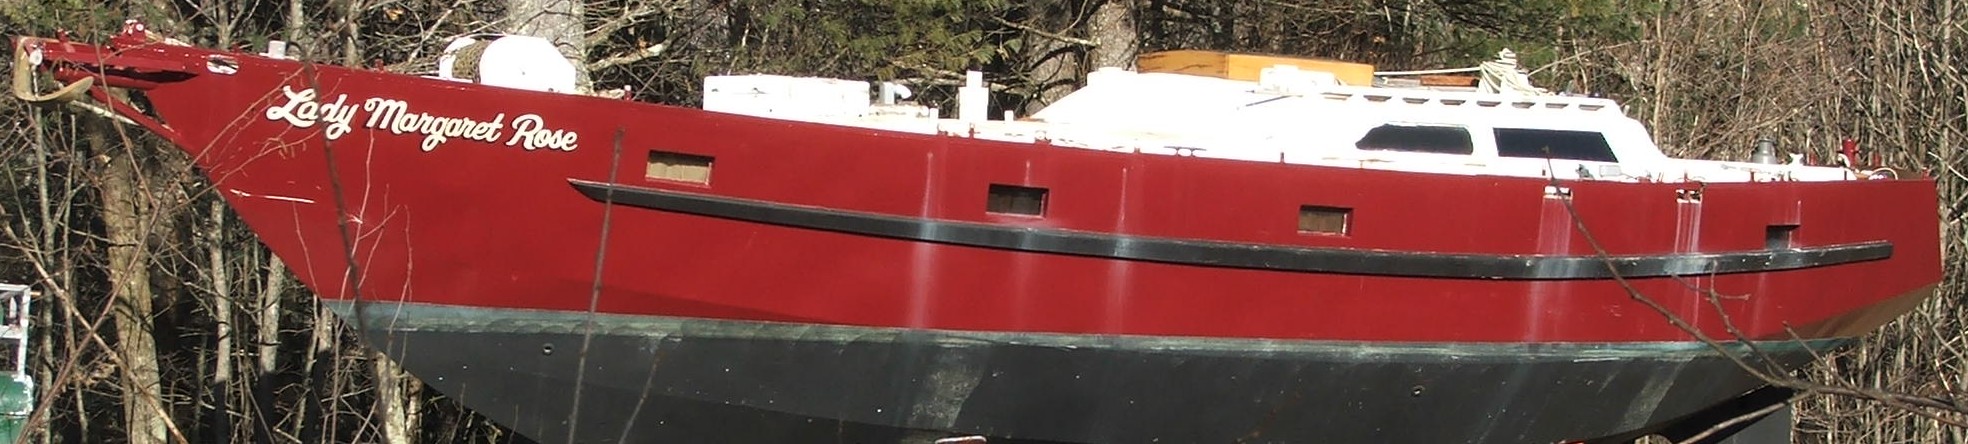 steel sailboat on tilton hill rd - boat repair epoxy